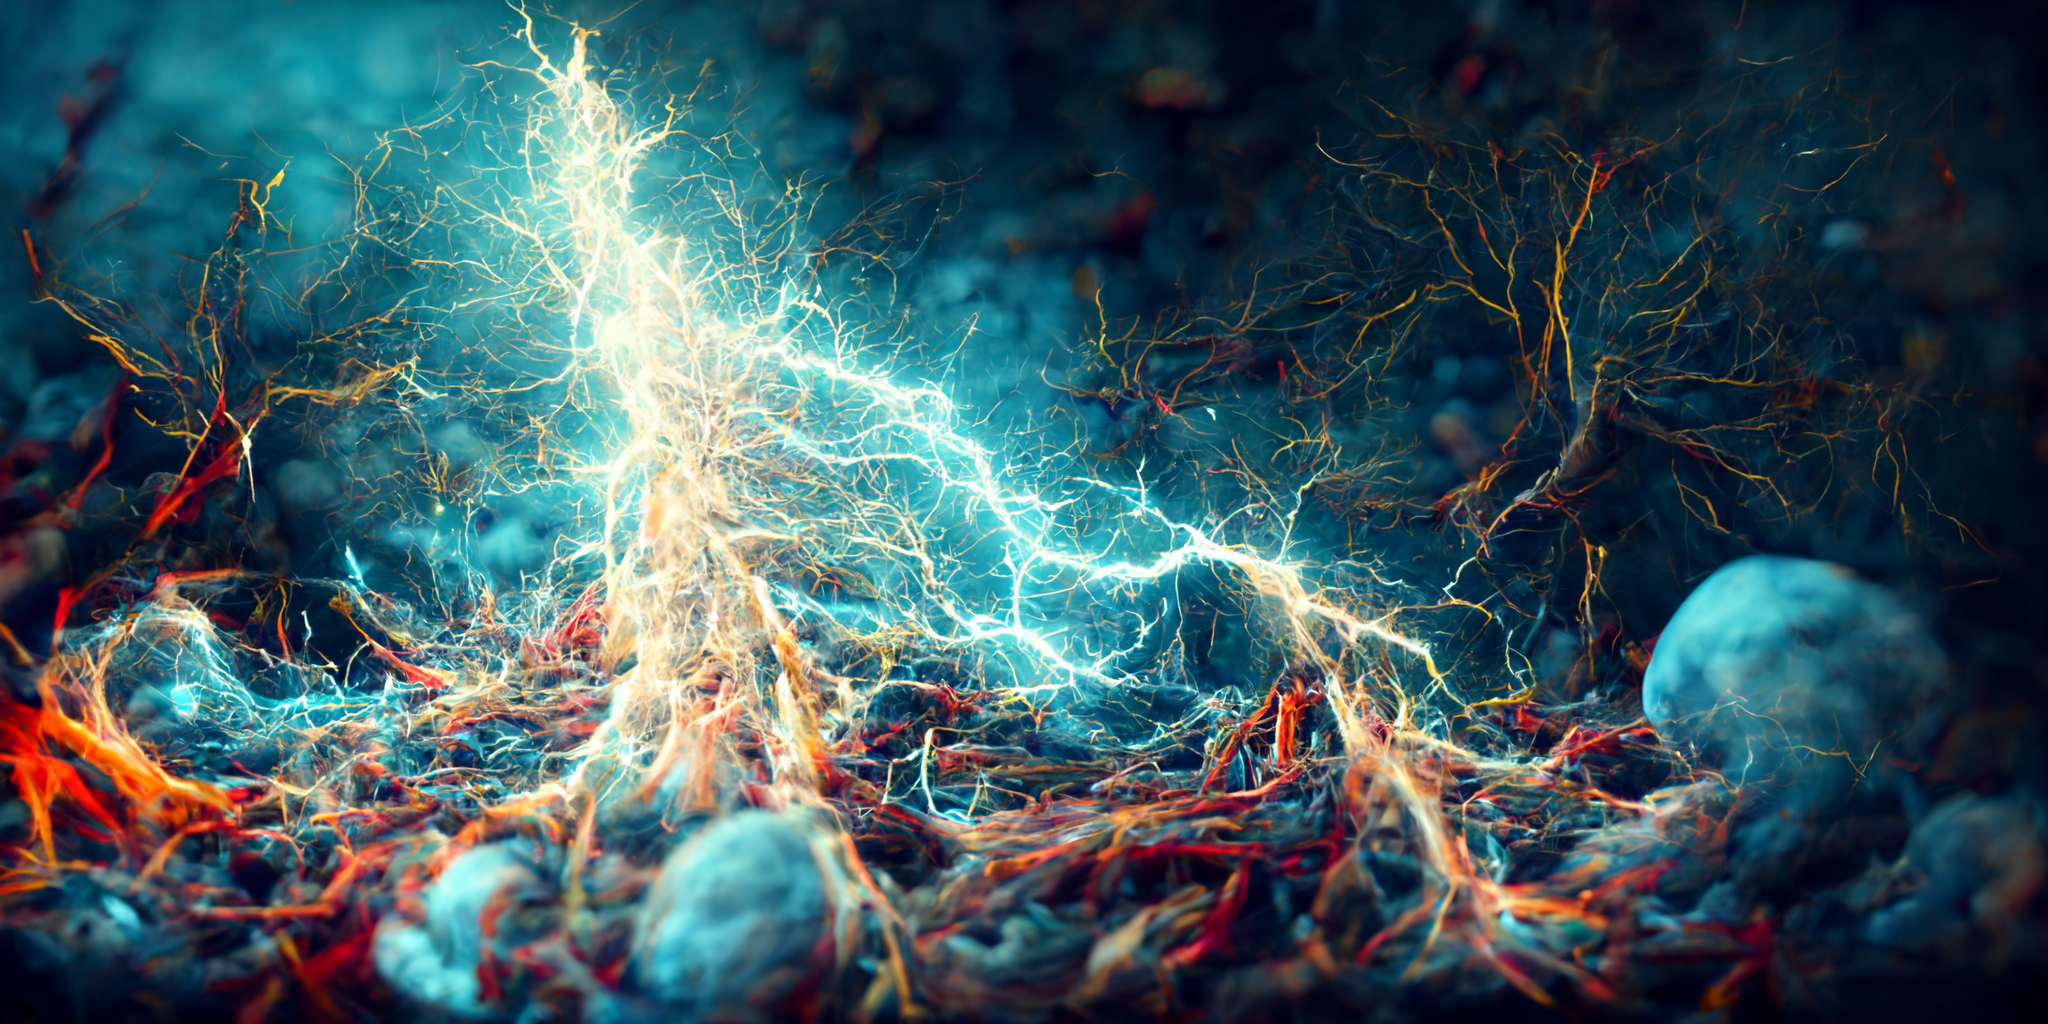 Flashes of lightning – braincells